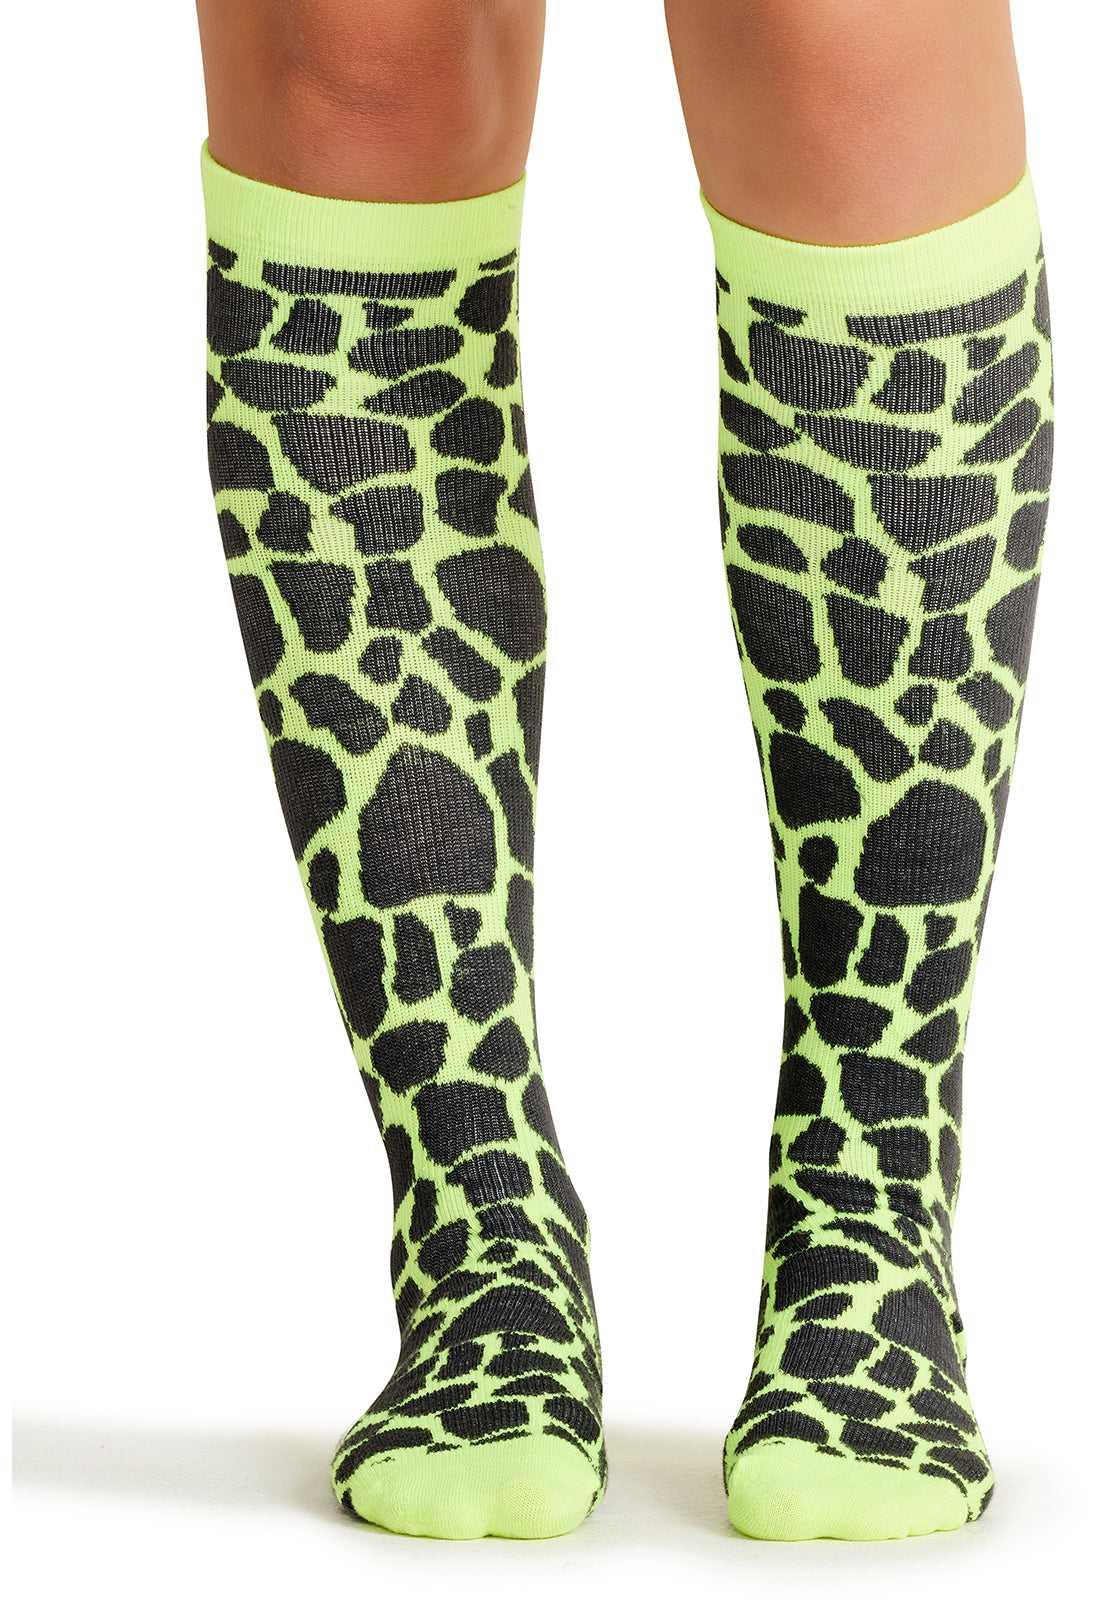 Regular Fit - Compression Socks 10-15mmHg Compression Socks Cherokee Legwear Glowing Giraffe  